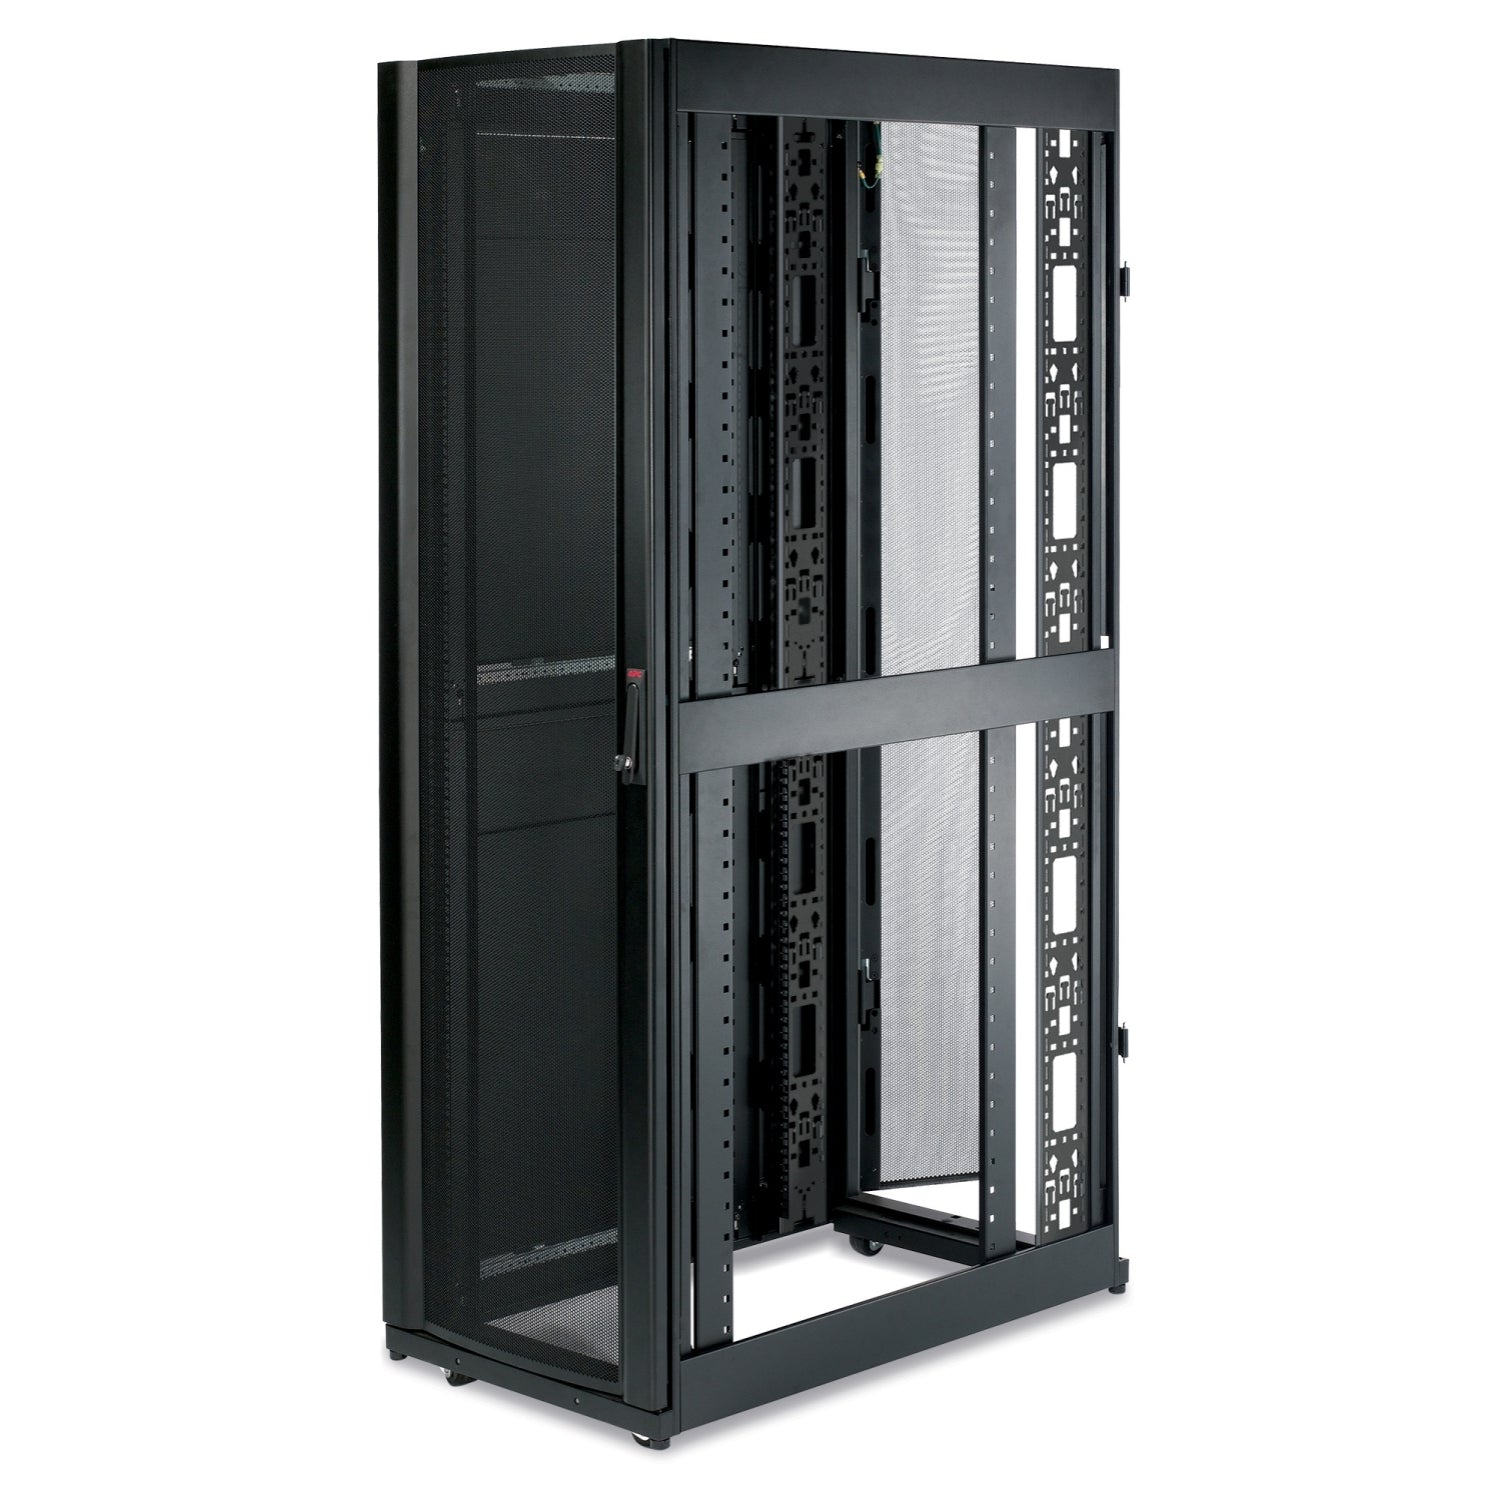 Envolvente para rack de servidor NetShelter SX 42U de APC, 600 mm x 1070 mm, con laterales negros.